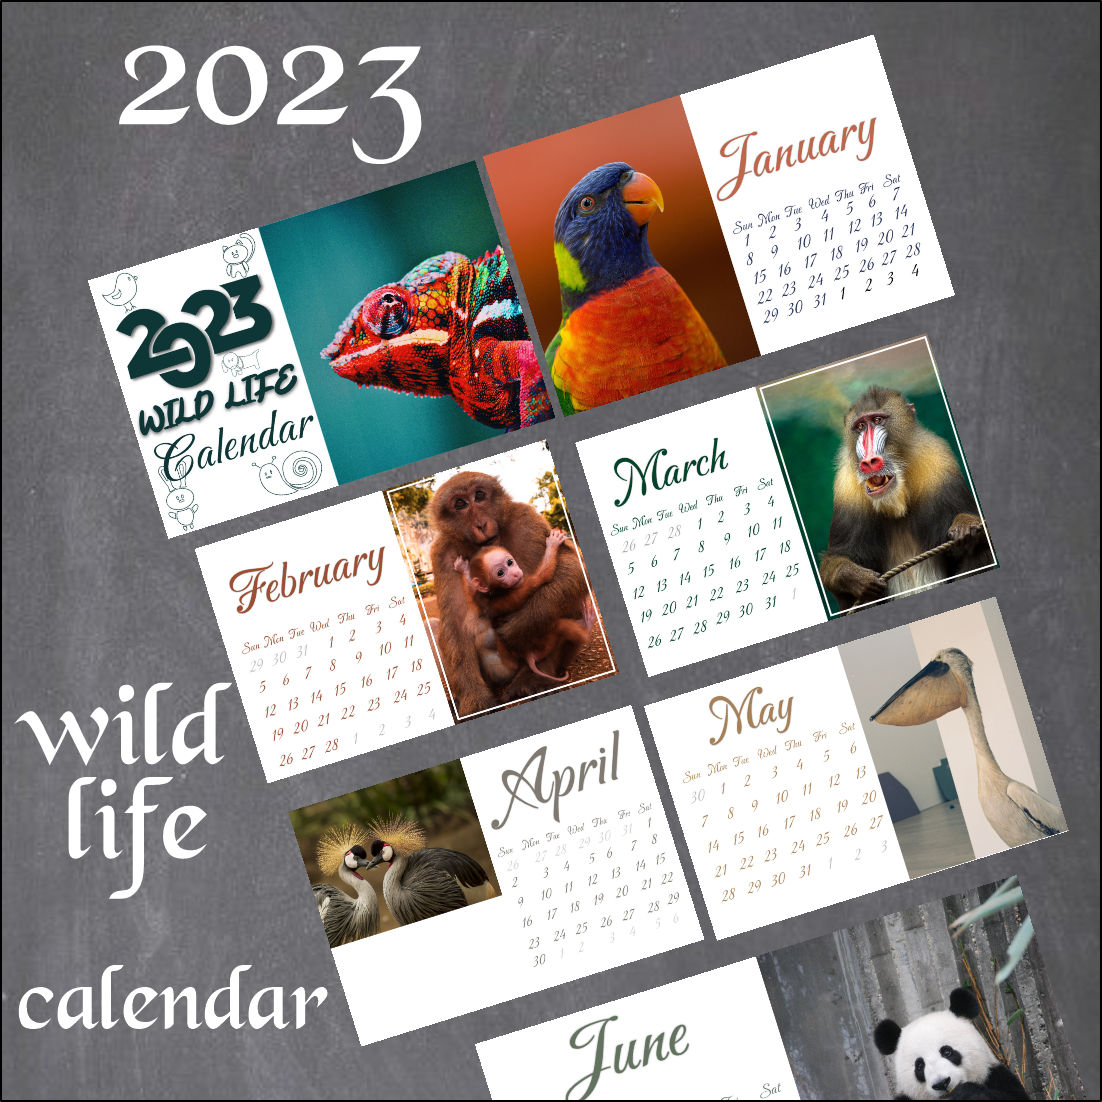 2023 Wild Life Calendar preview image.